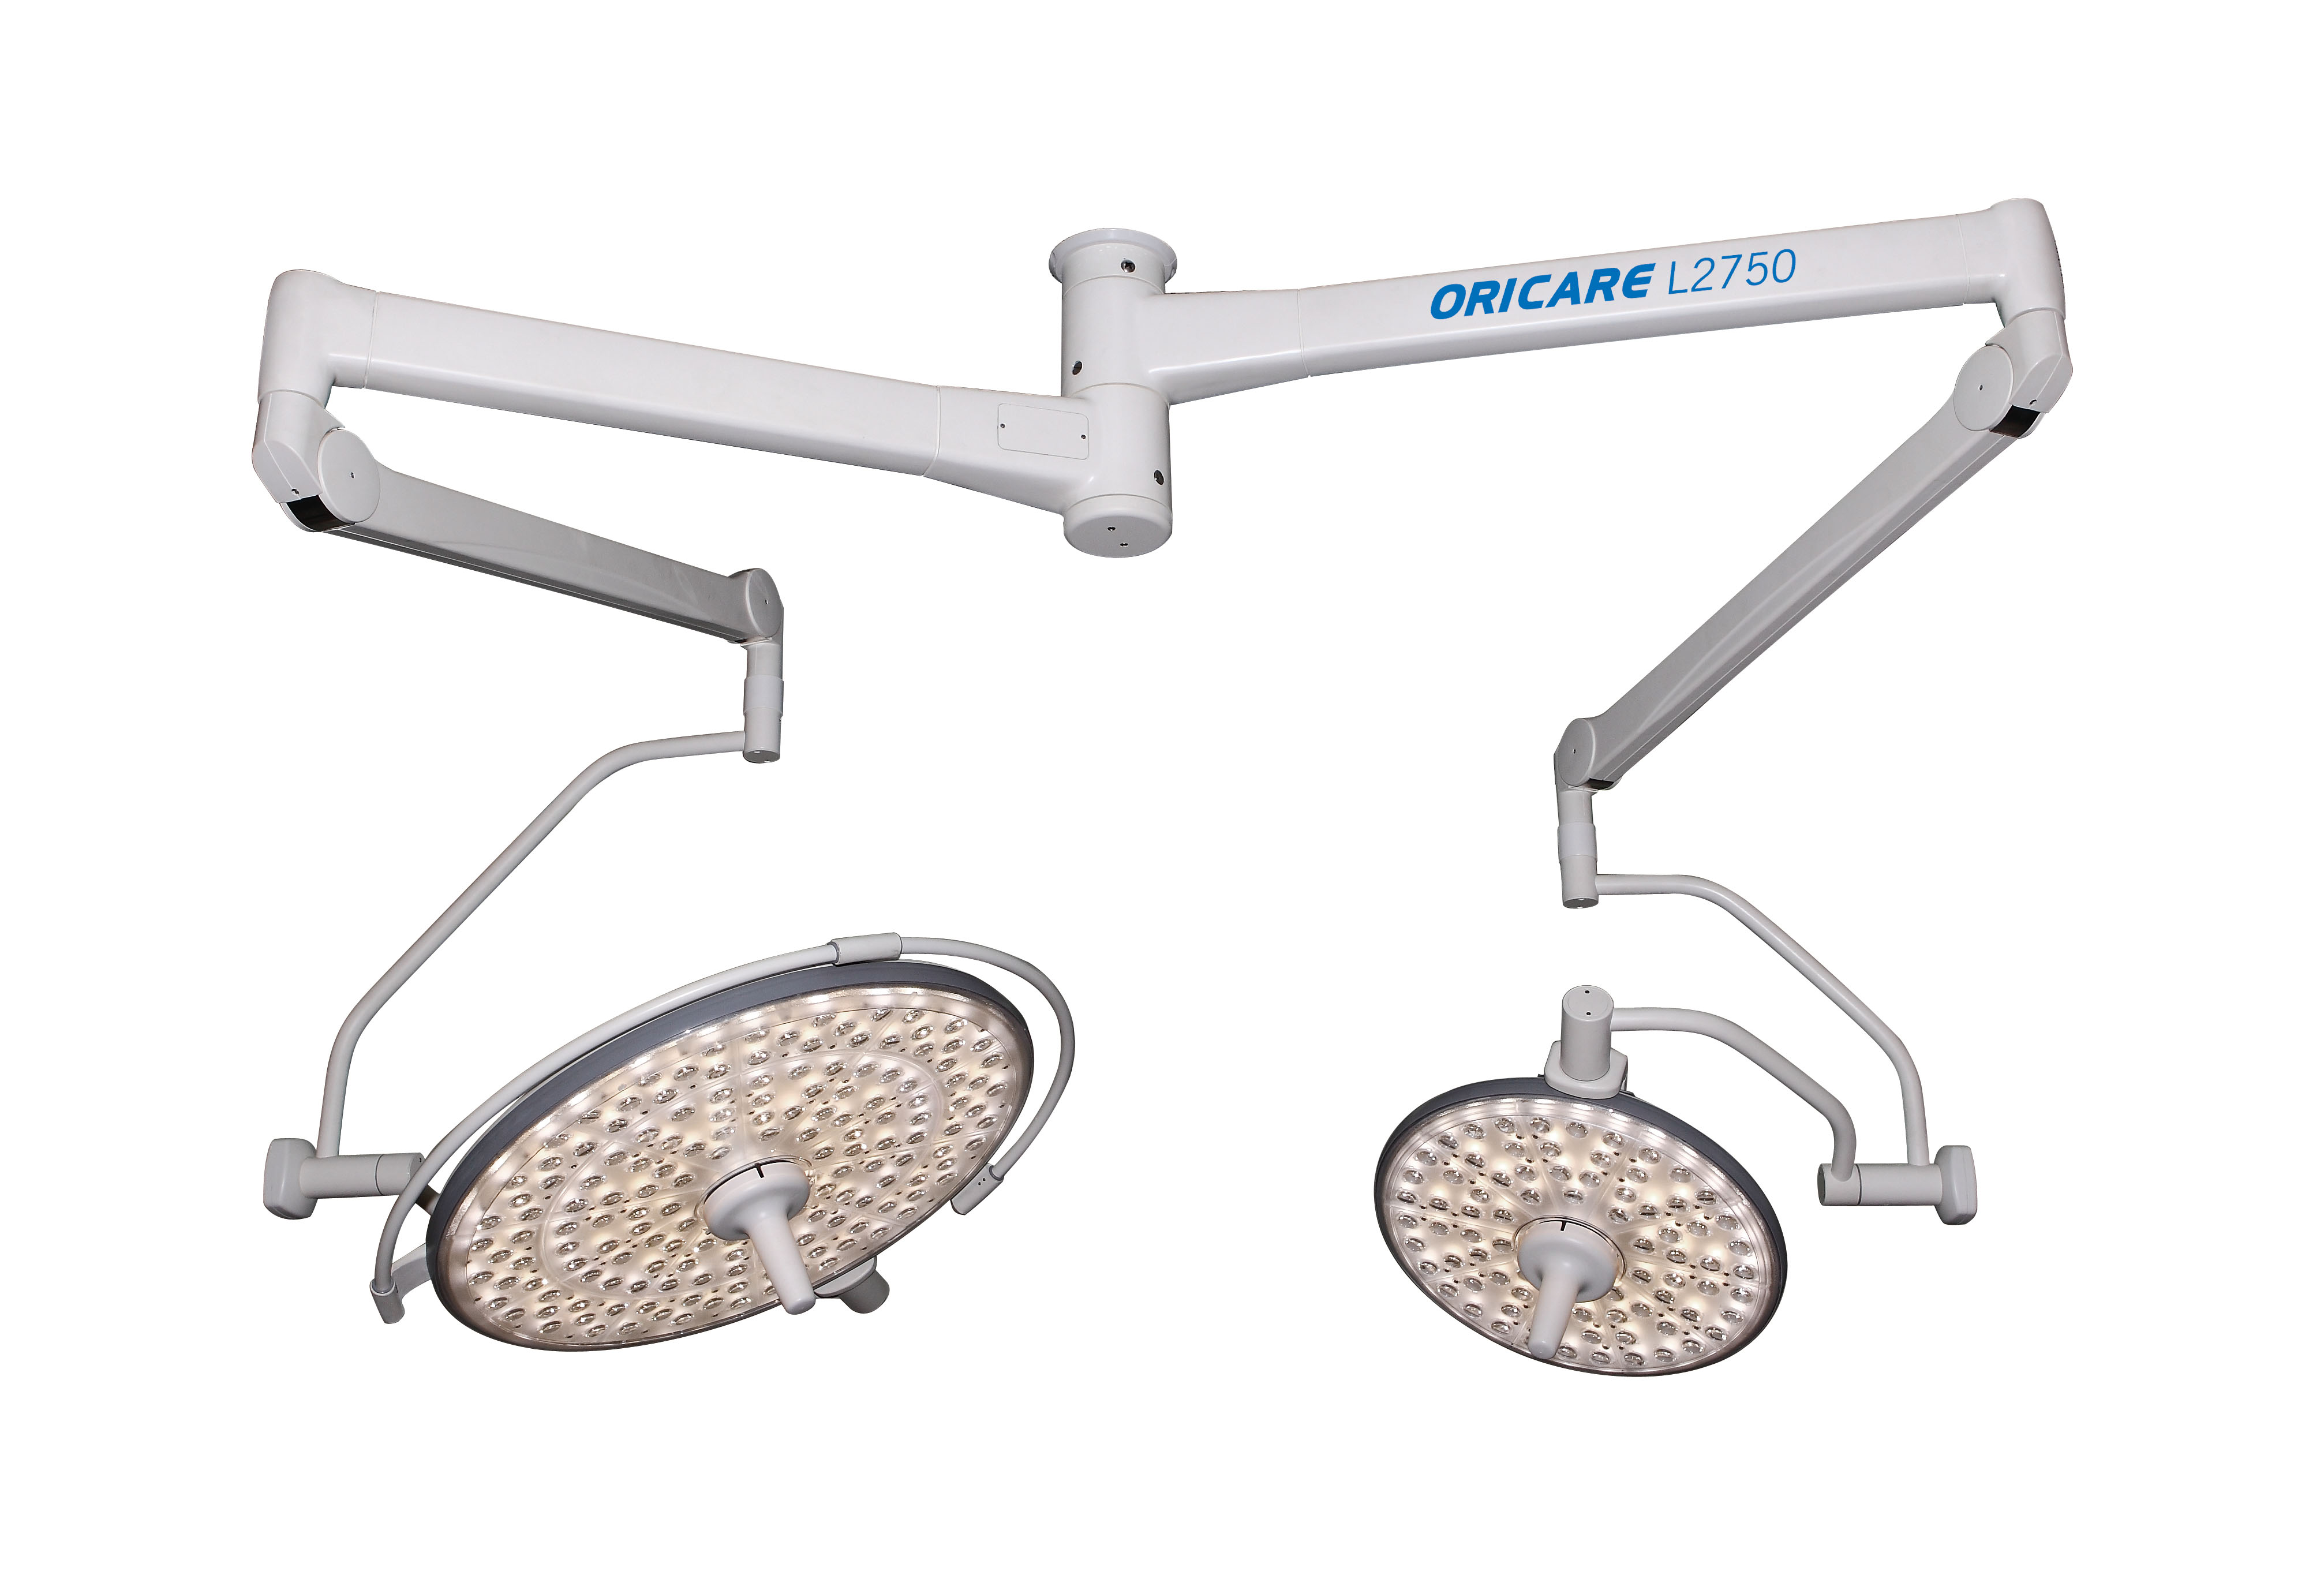 Lampy operacyjne podwójne Oricare L2700 + L2750